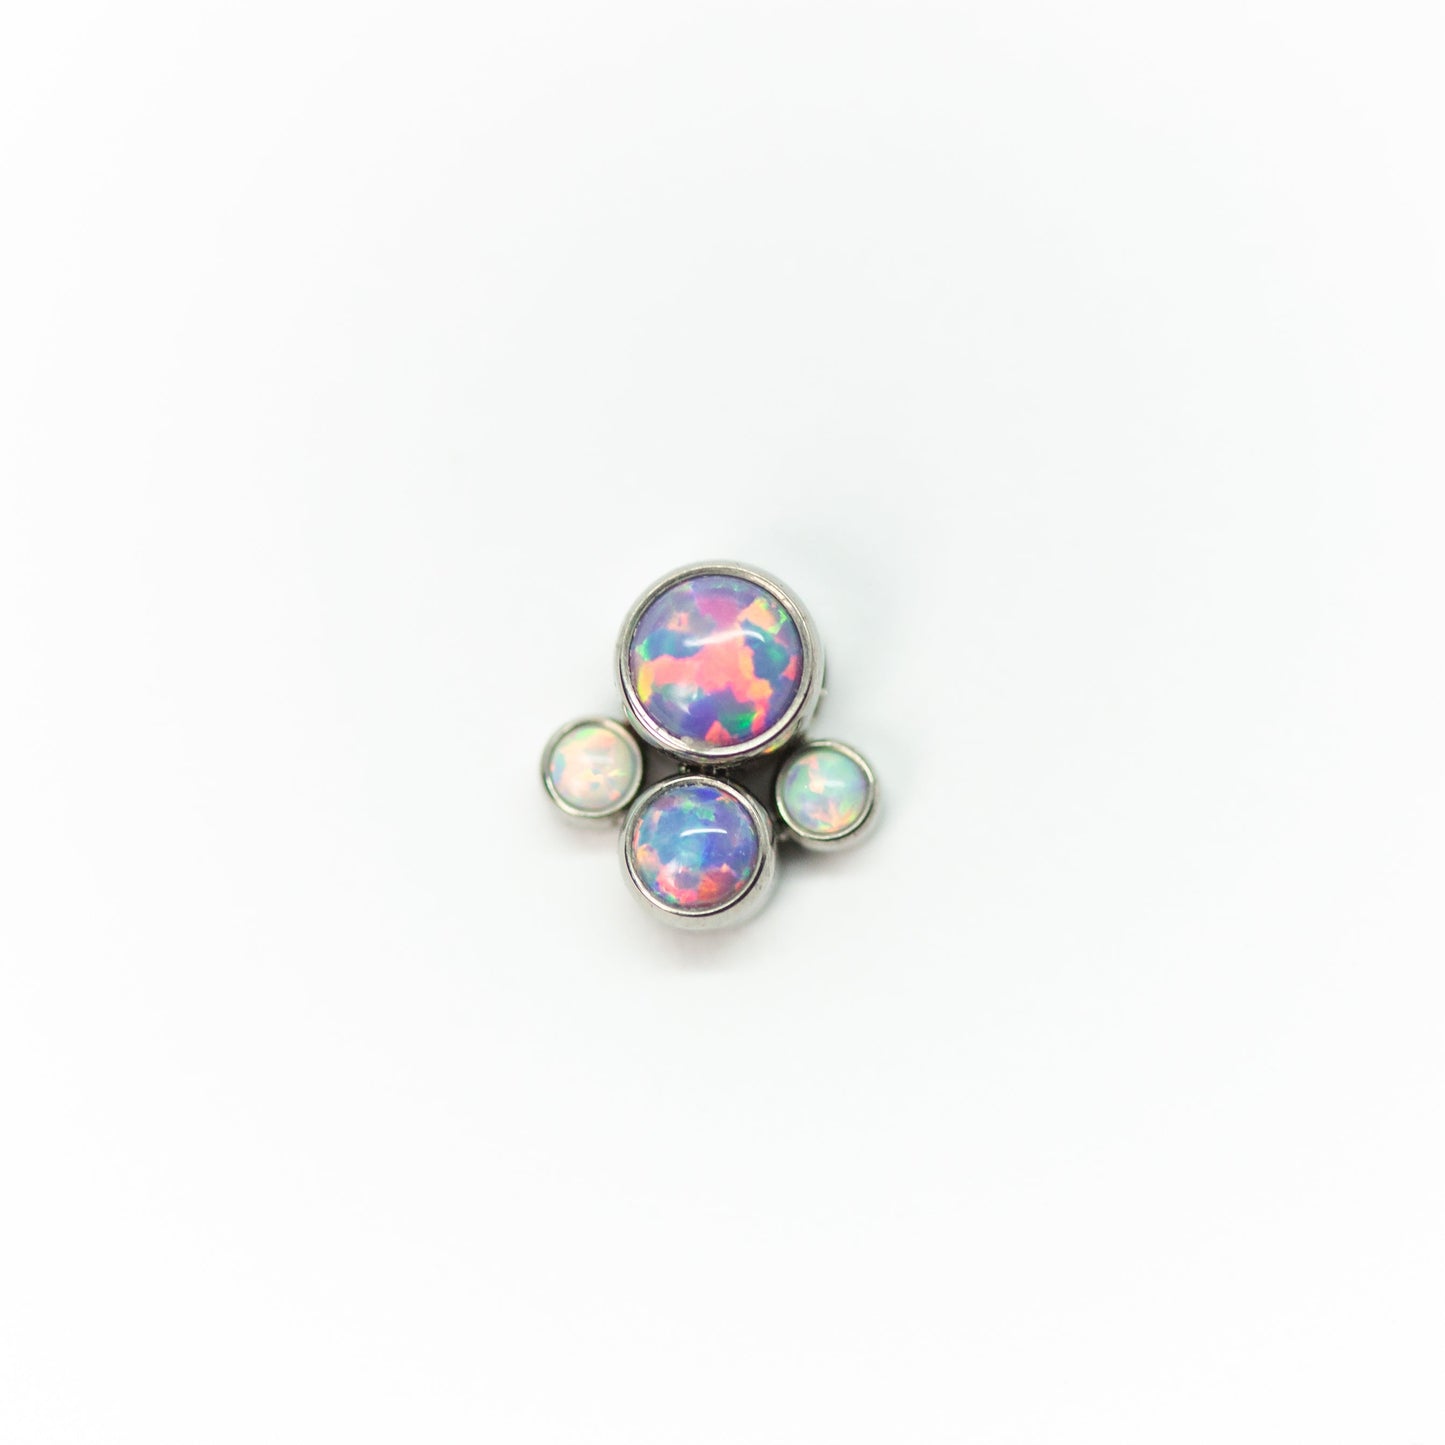 Titanium Captive Gem & Opal Bead Clusters - Avanti Body Jewelry